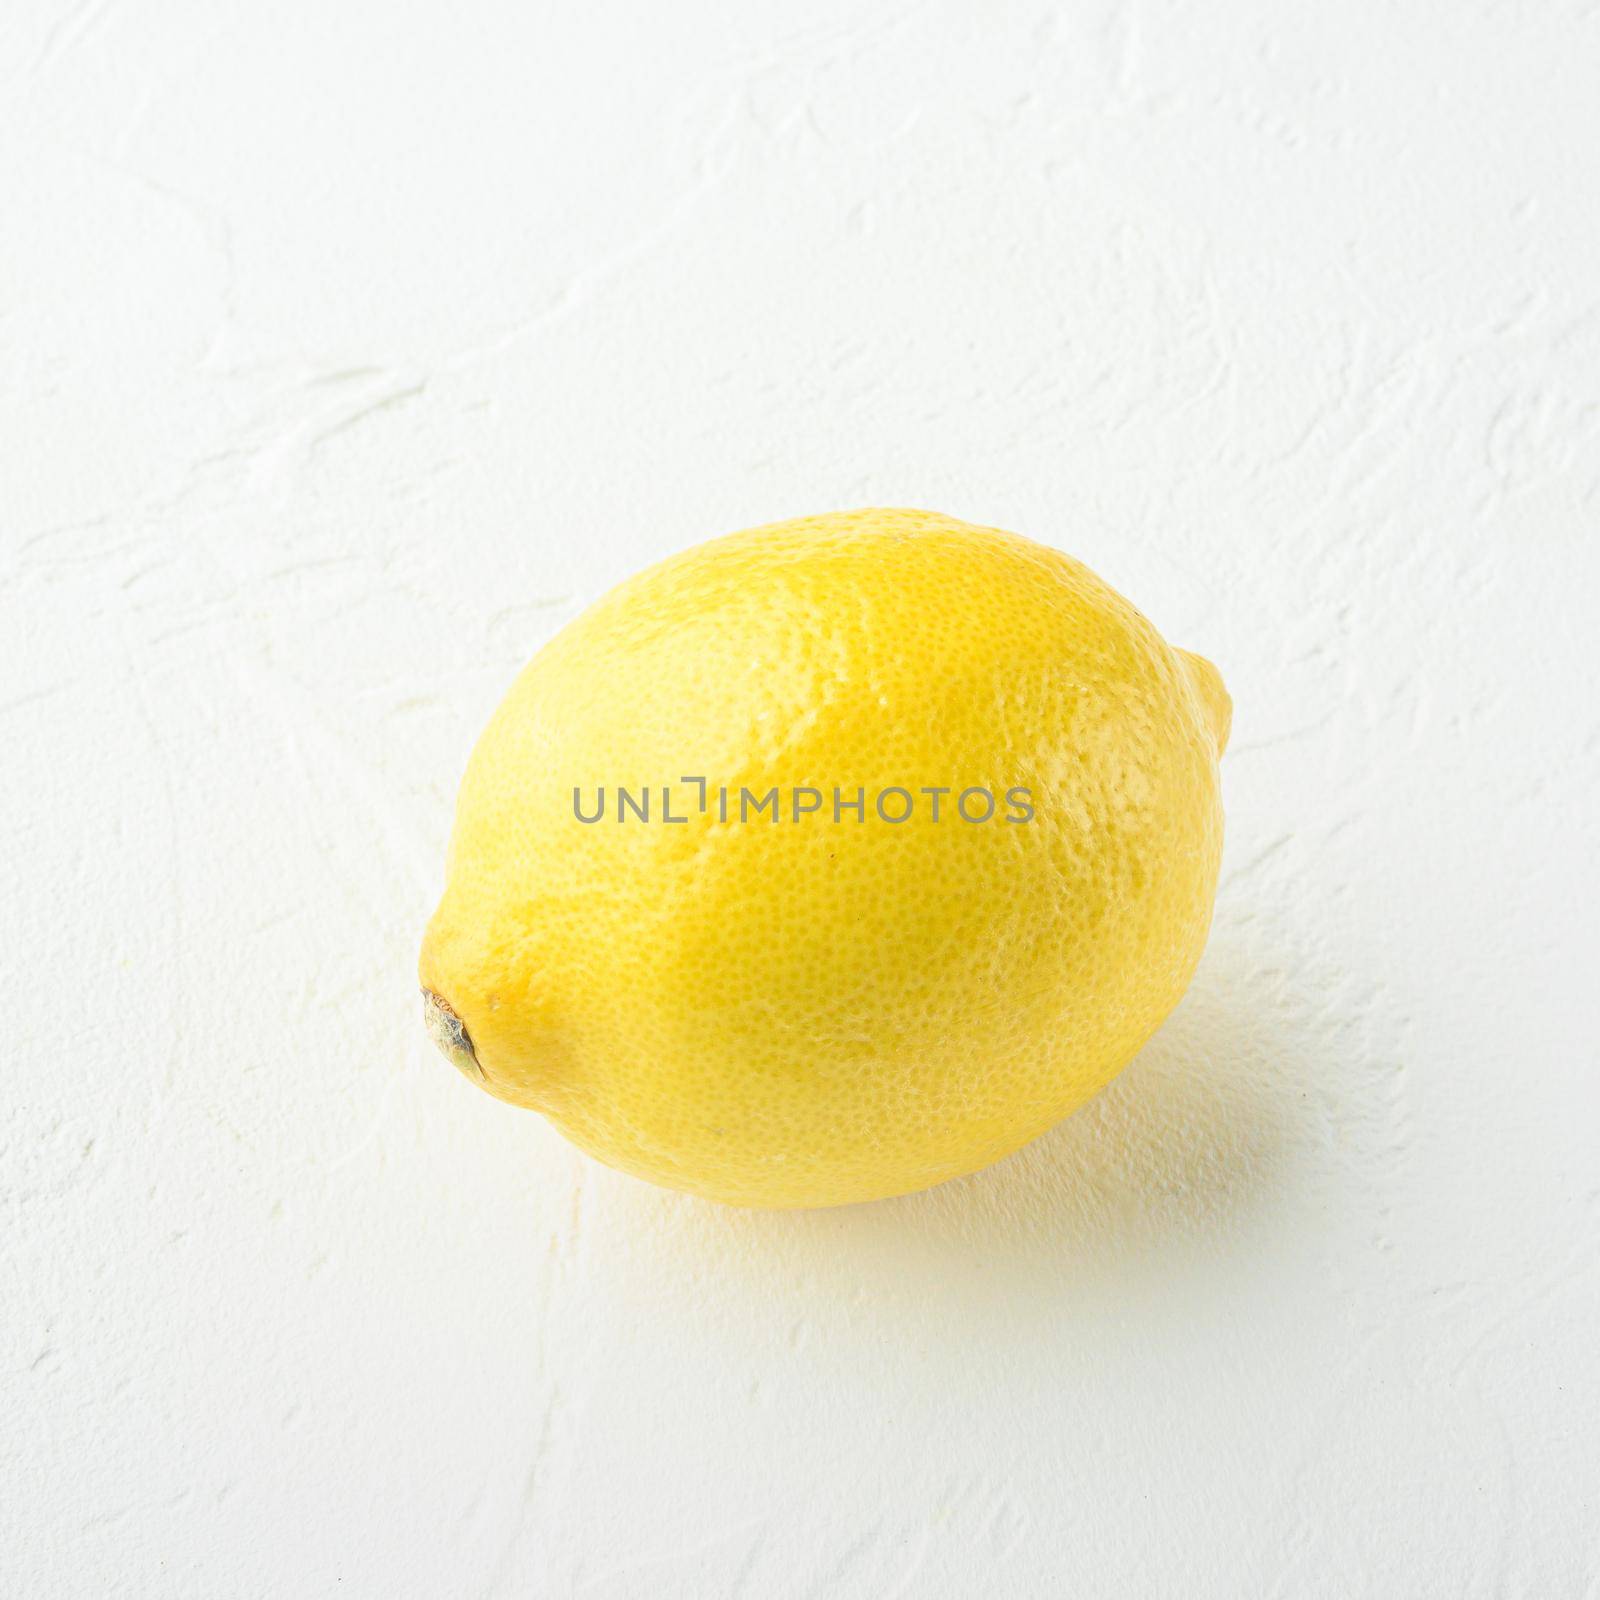 Ripe yellow lemon, square format, on white stone background by Ilianesolenyi